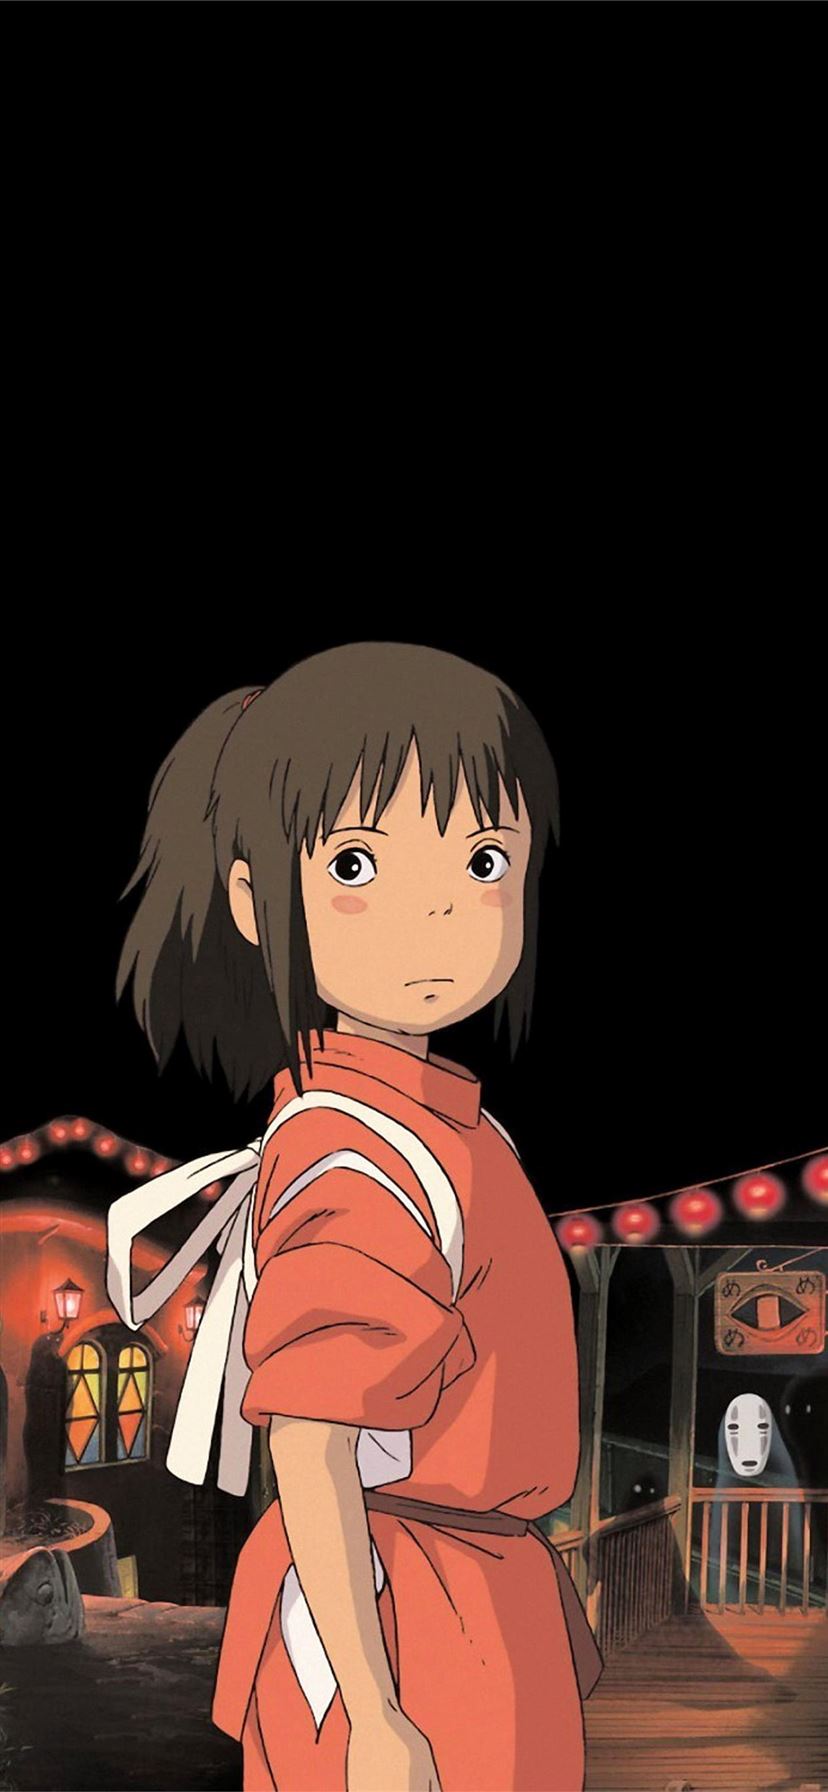 Studio Ghibli Wallpaper Explore more Animated Animation Film Studio  Hero Japanese wallpaper h  Studio ghibli poster Studio ghibli  background Ghibli artwork